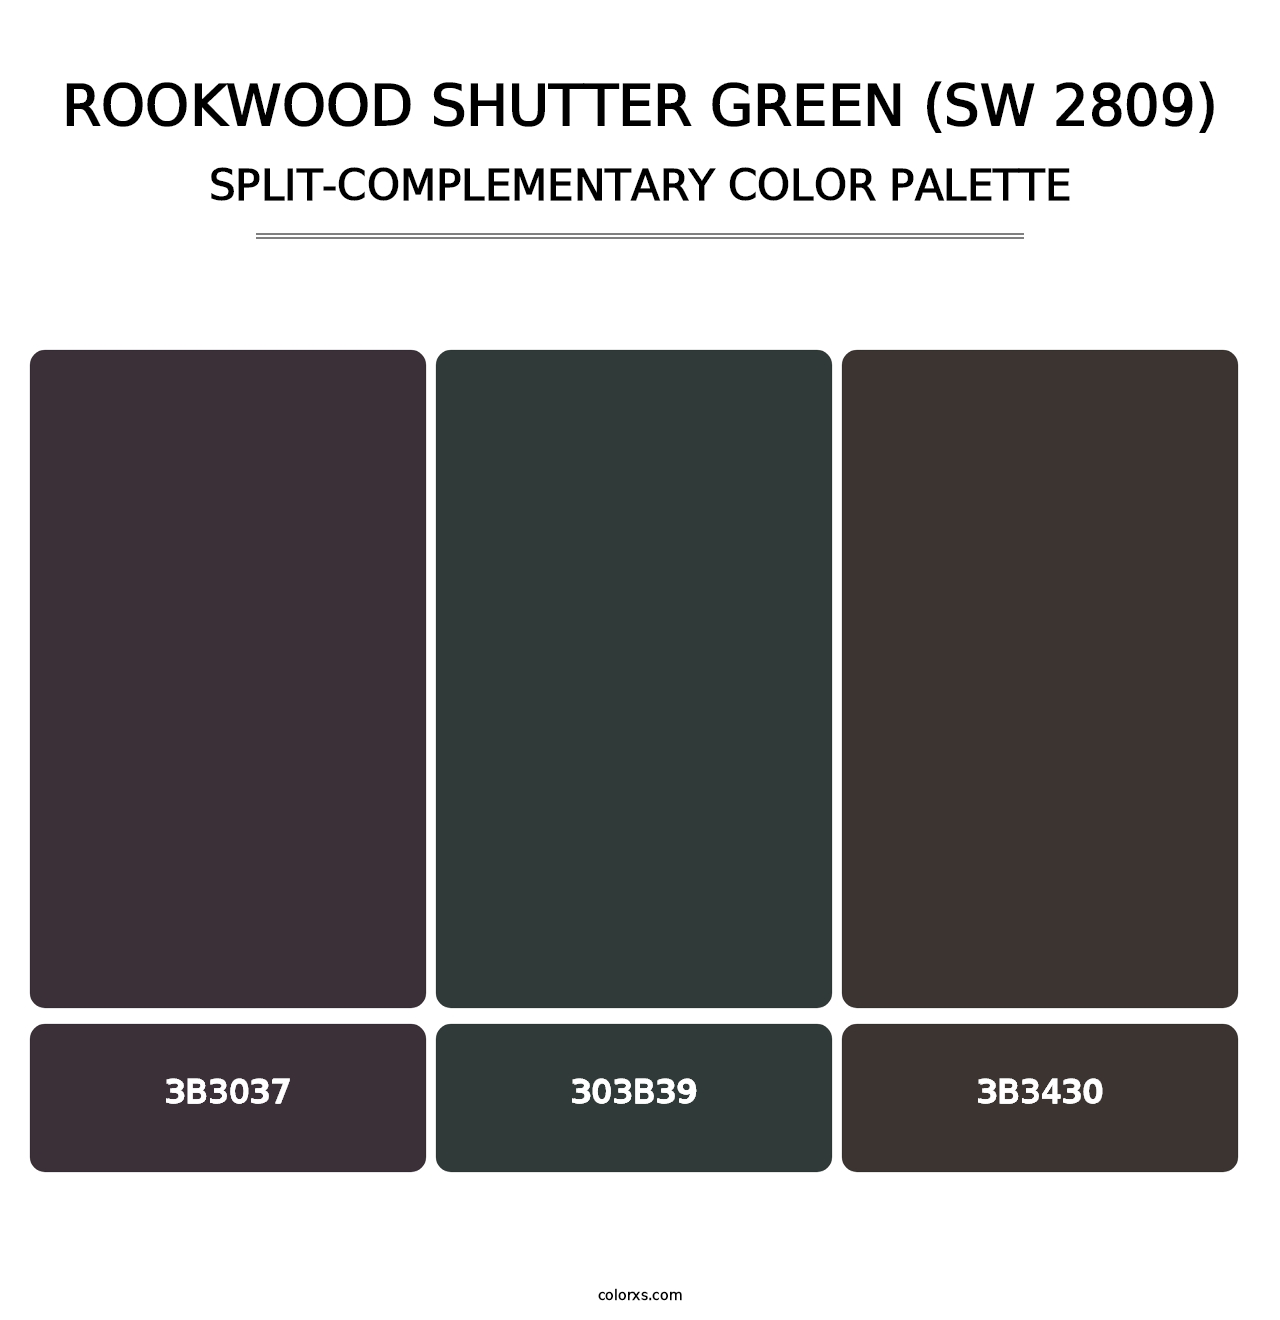 Rookwood Shutter Green (SW 2809) - Split-Complementary Color Palette